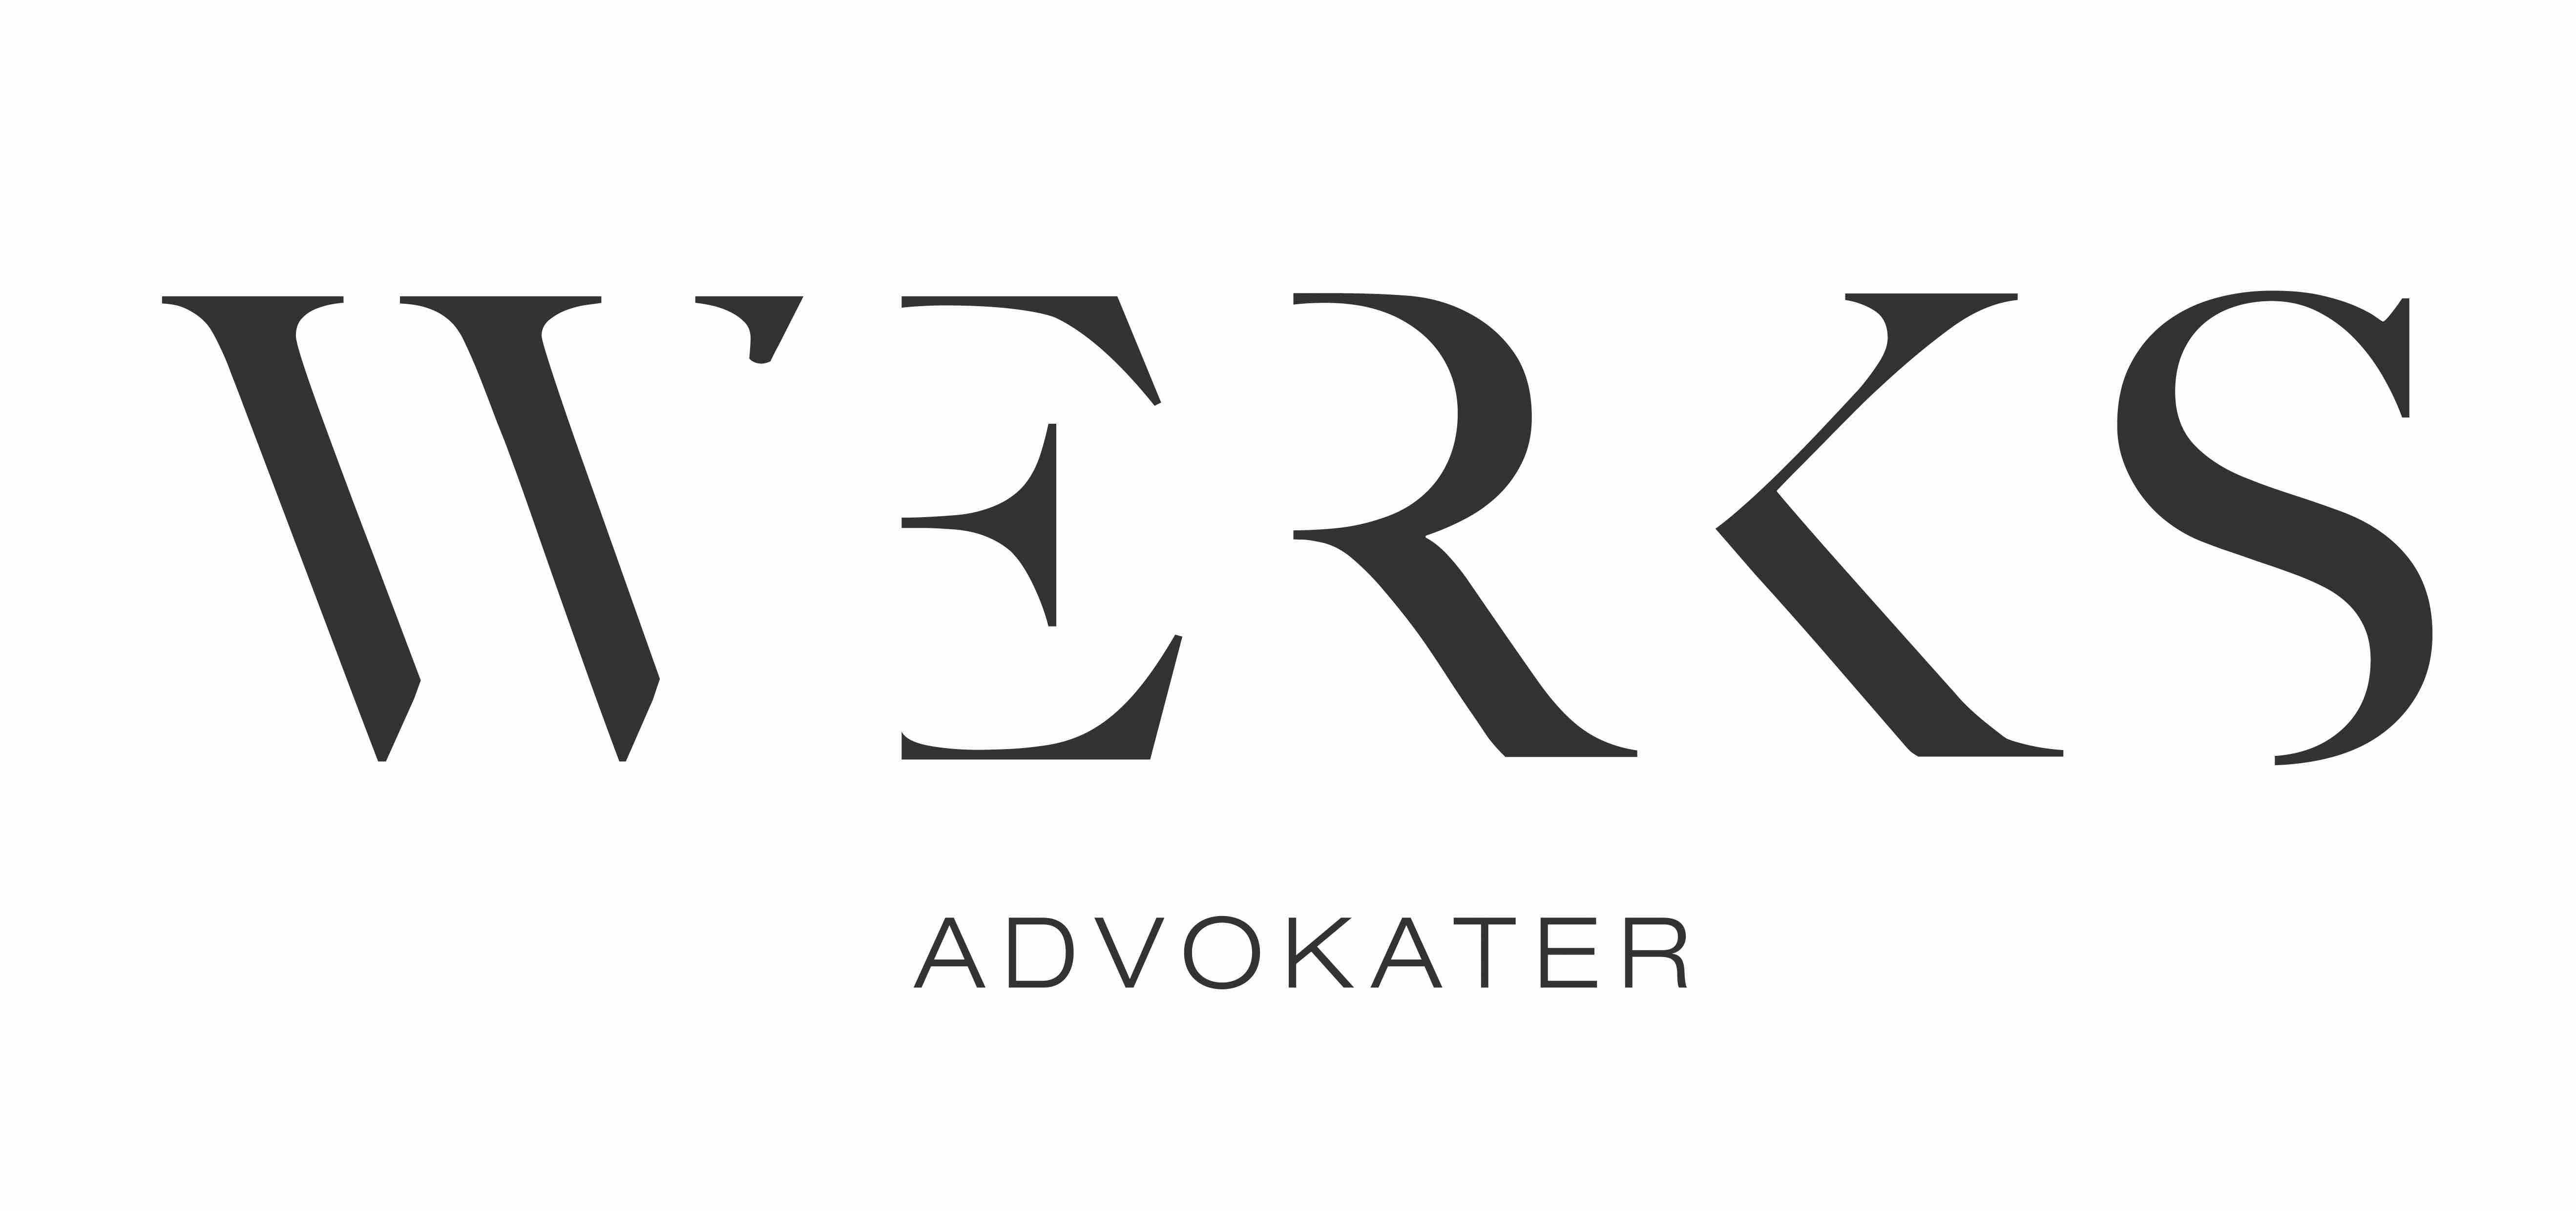 Werks Logo - Werks-logo-advokater - Greenlane